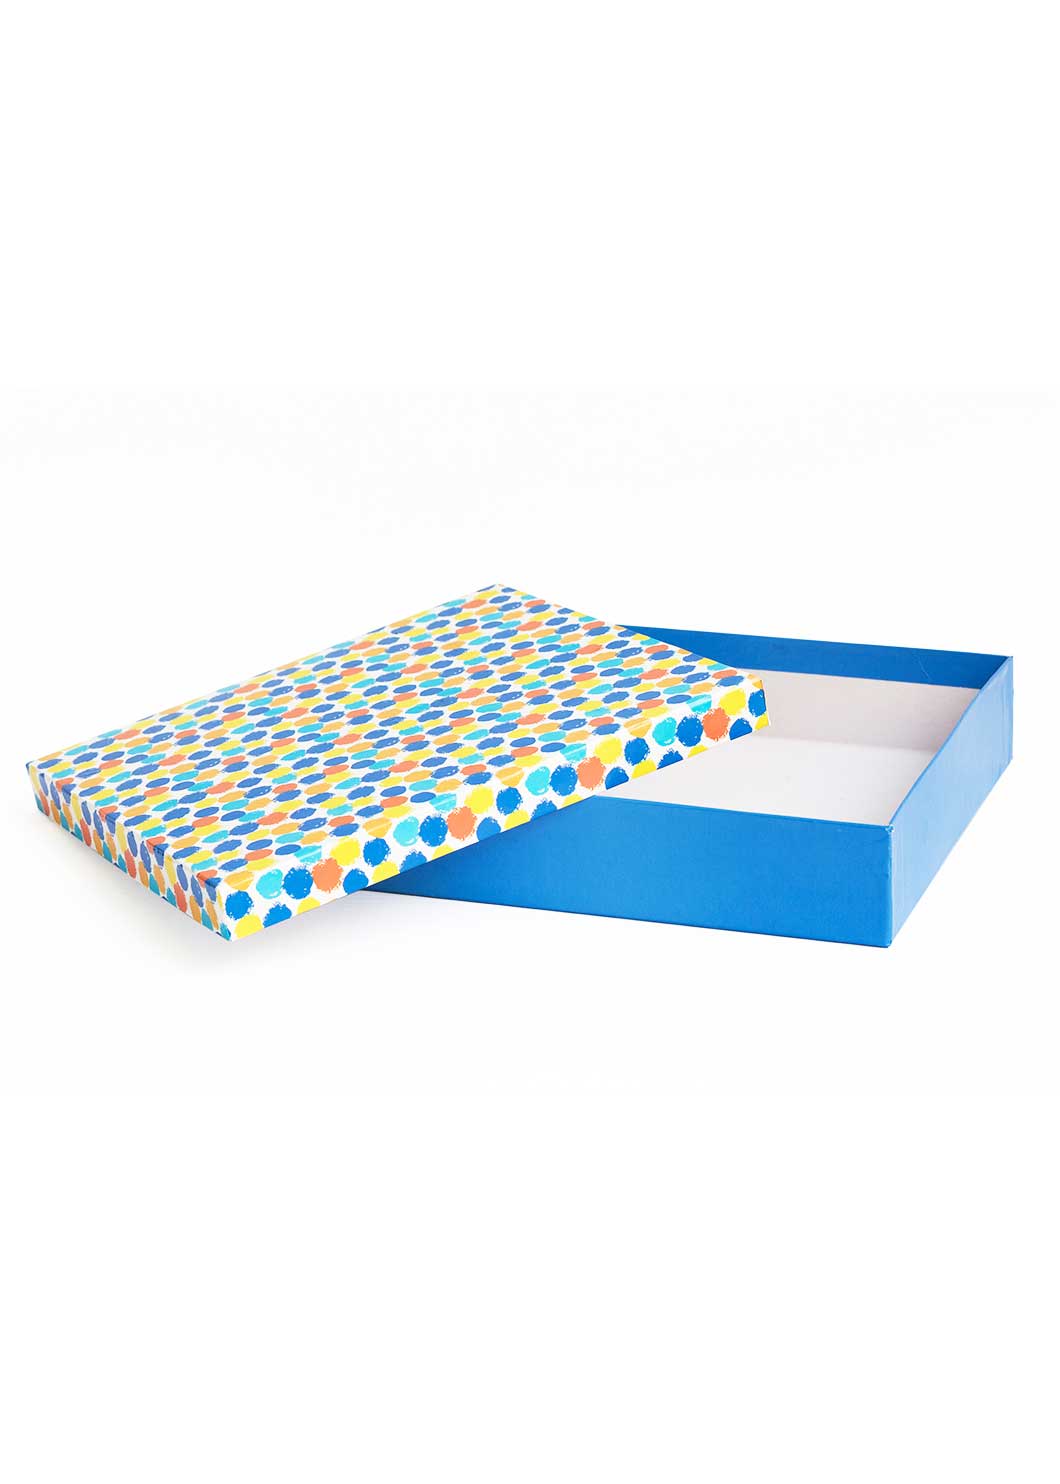 Square Empty Box - Blue Yello Orange Polka Dot Box For Clothe Packaging - Plain Empty Designed Box